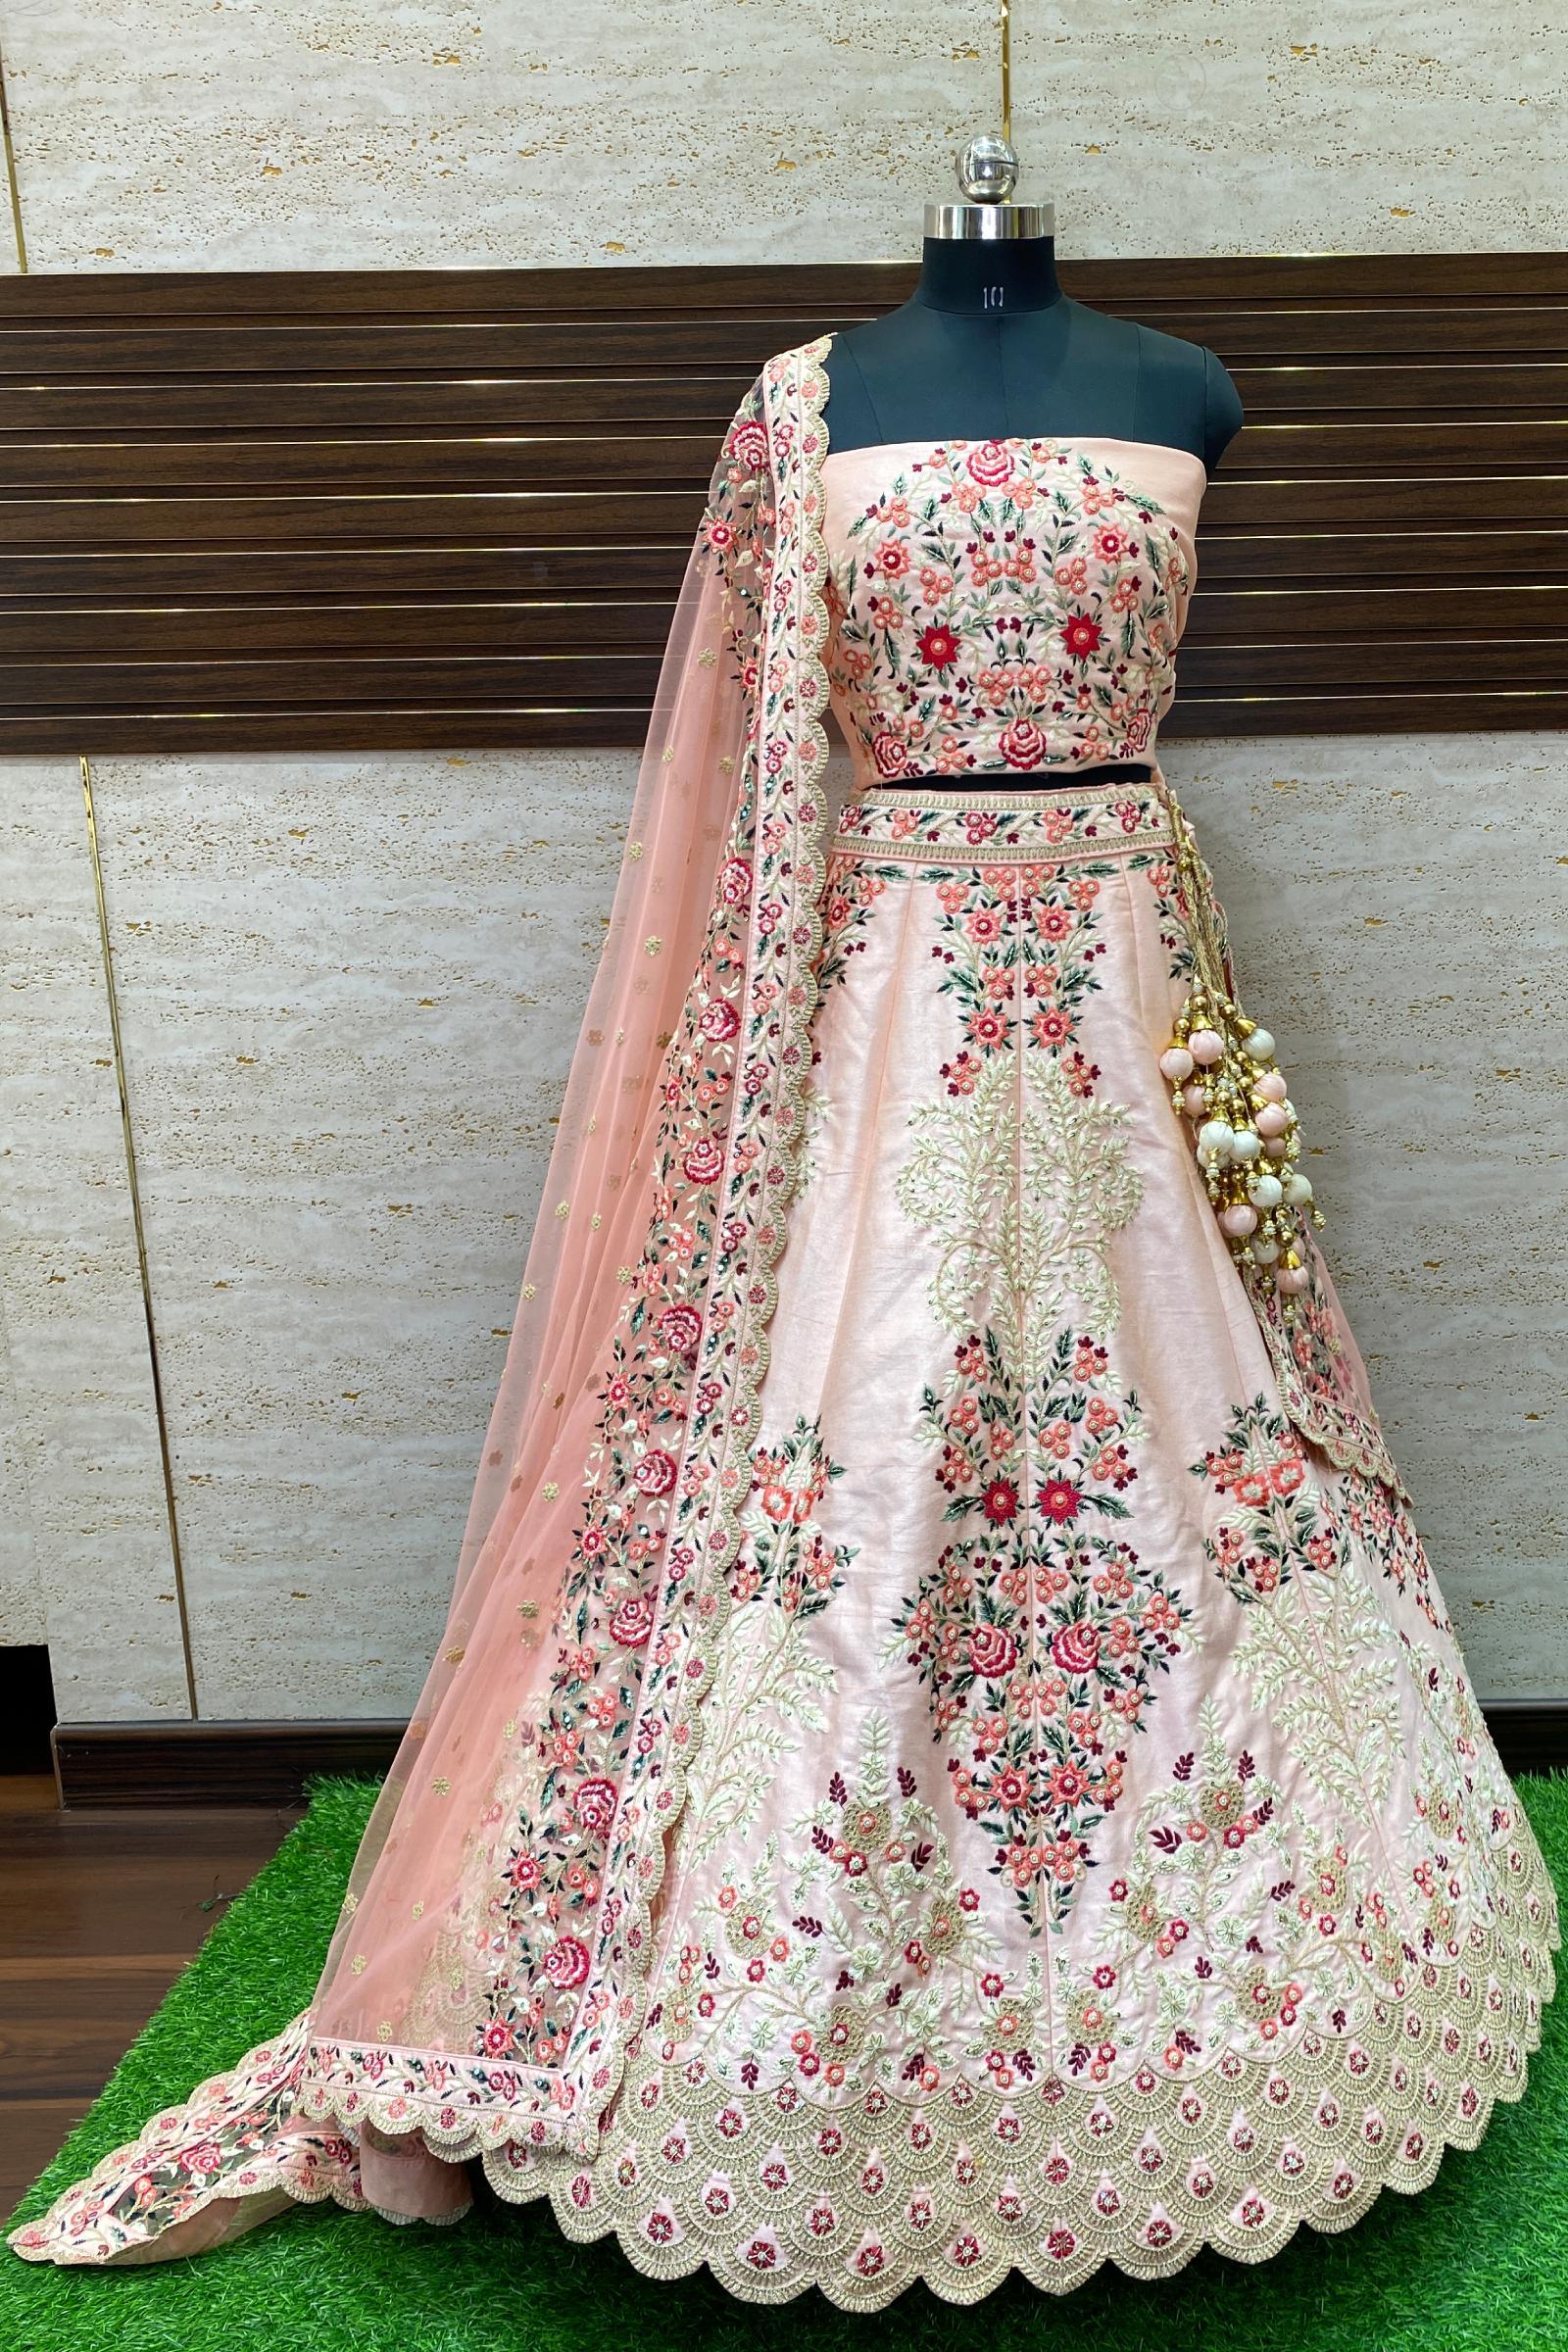 Pink Colour Bridal Lehenga Choli Velvet Fabric With Embroidery,Hand Work.